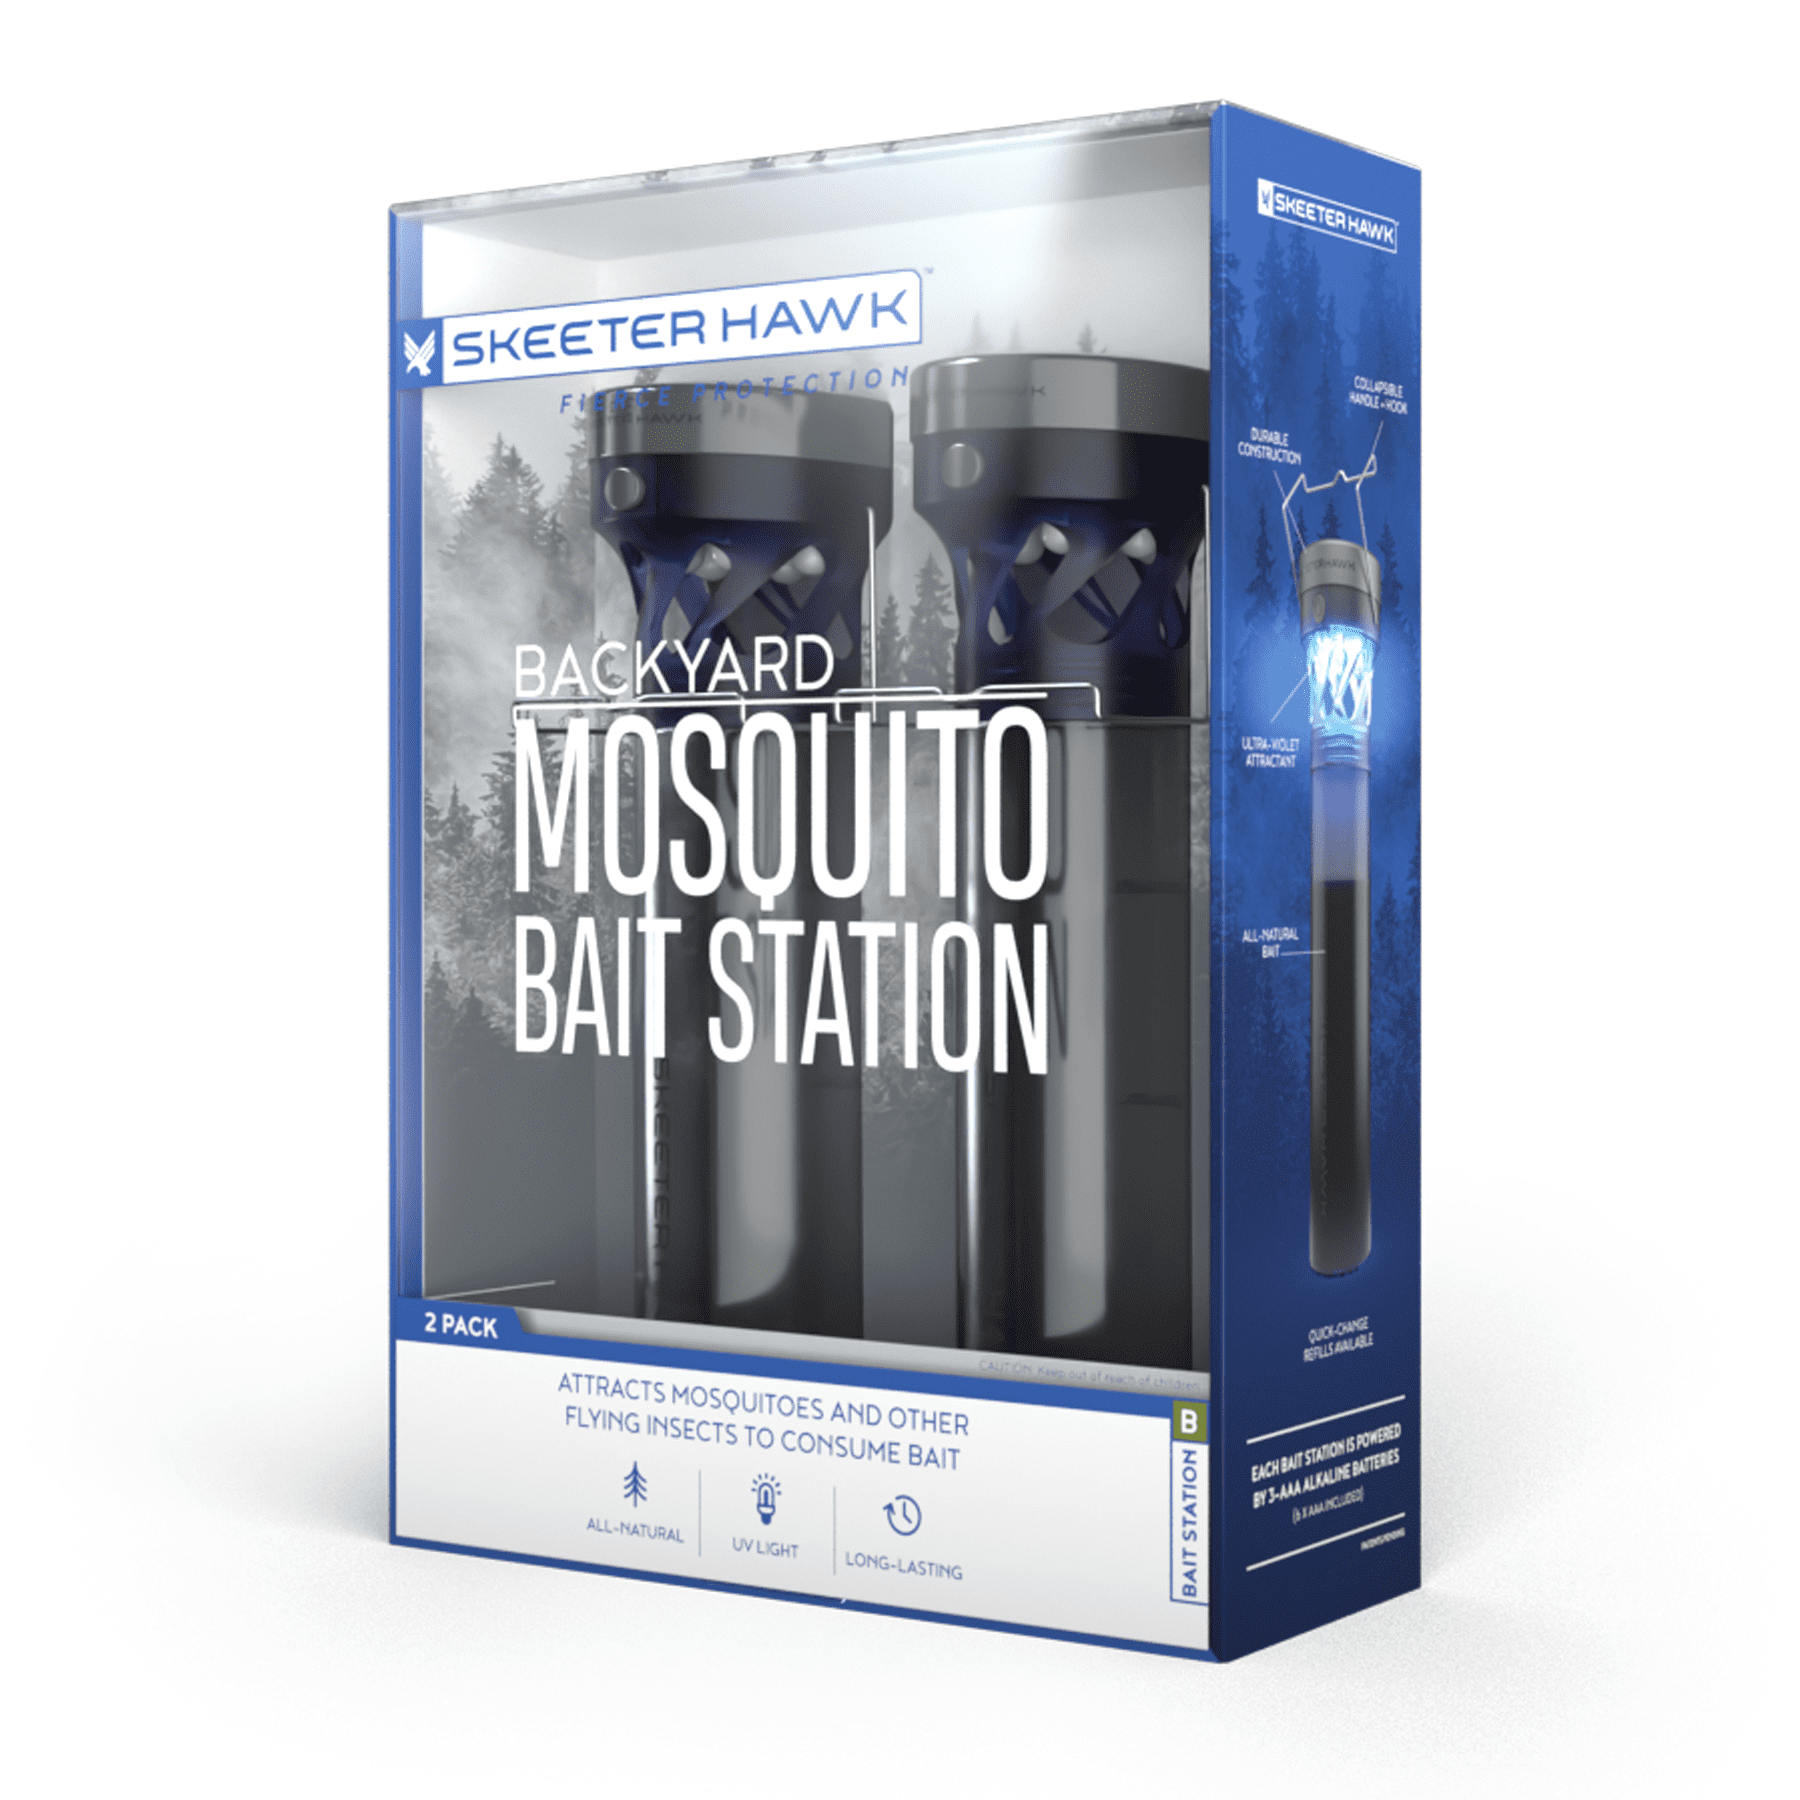 SKEETER HAWK Backyard Mosquito Bait Station 2 PackOutdoor Bug Killer Using 